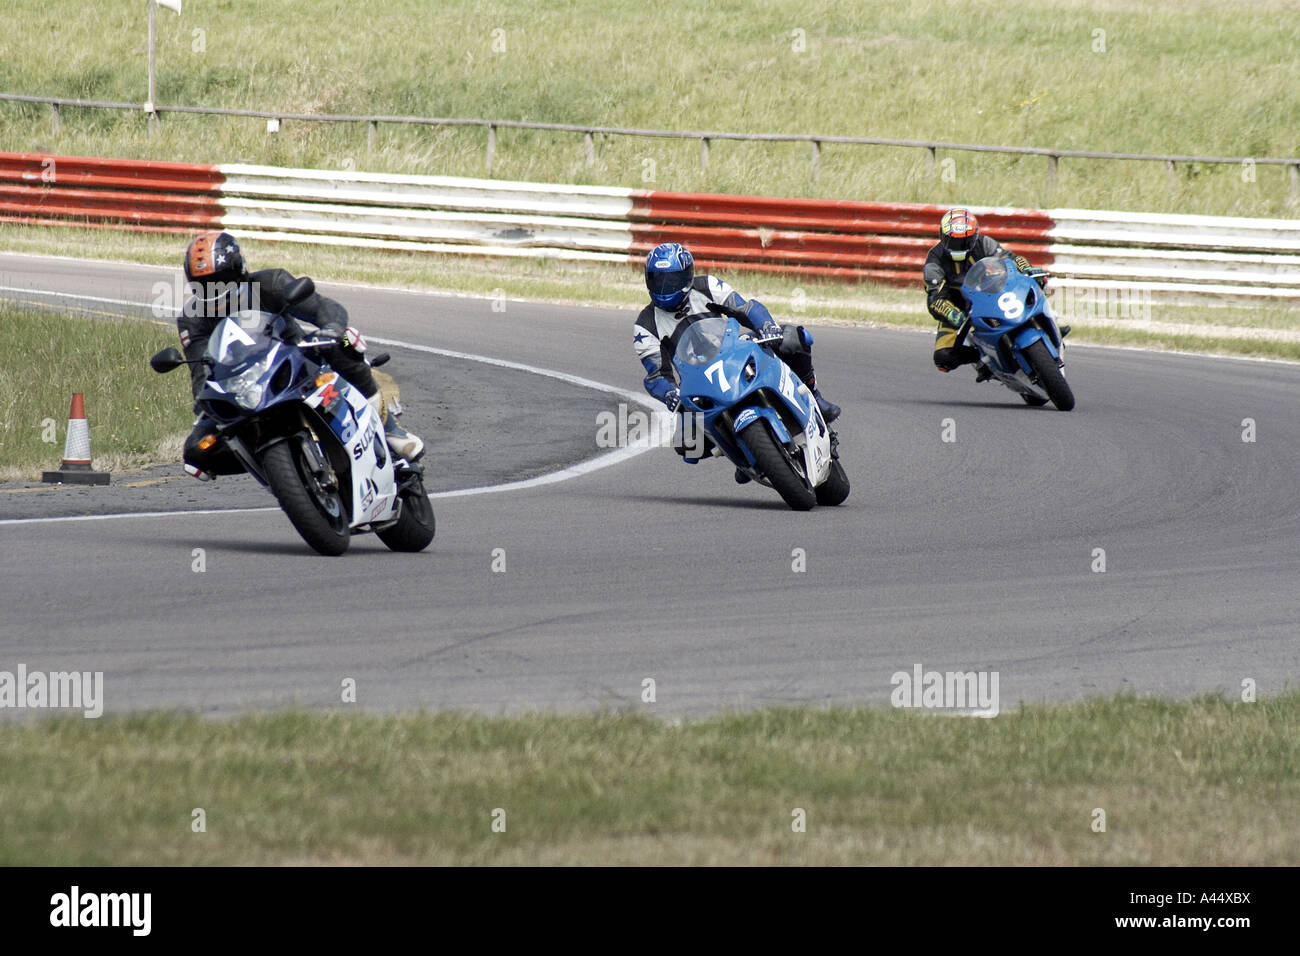 three motorbikes racing track day speed race Stock Photo